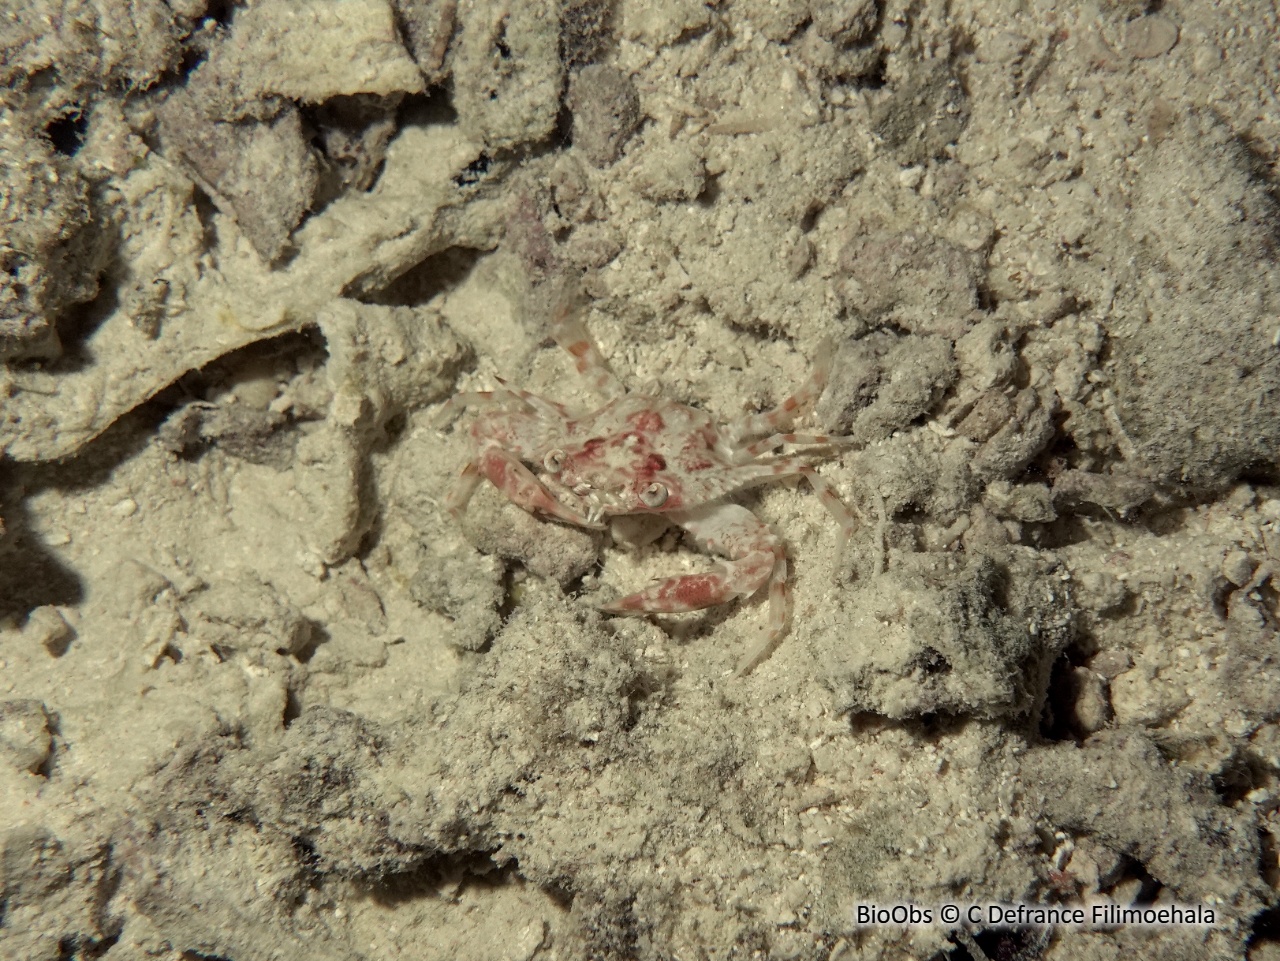 Crabe nageur Indo-Pacifique - Xiphonectes longispinosus - C Defrance Filimoehala - BioObs